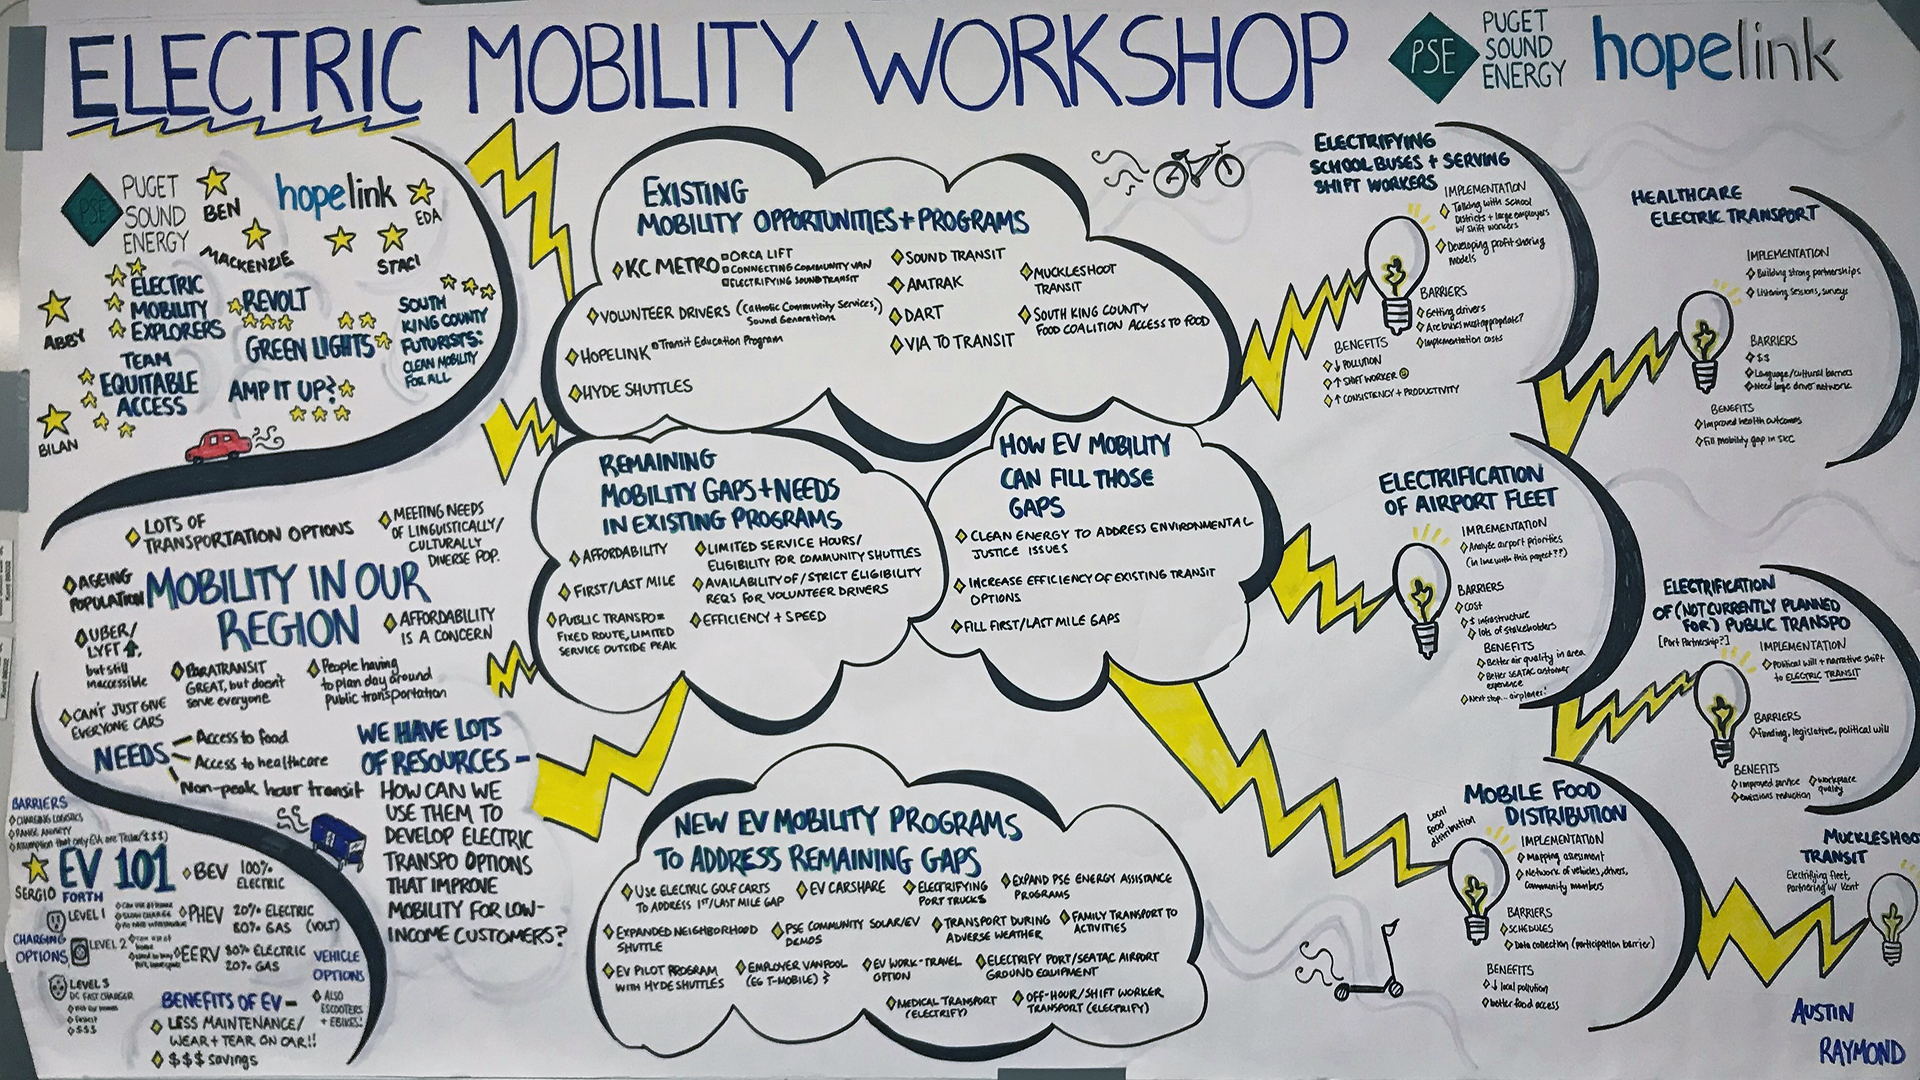 Hopelink와 PSE가 Equity Focused 파일럿을 통해 공동 주최한 전기 모빌리티 워크숍의 아이디어 게시판입니다.